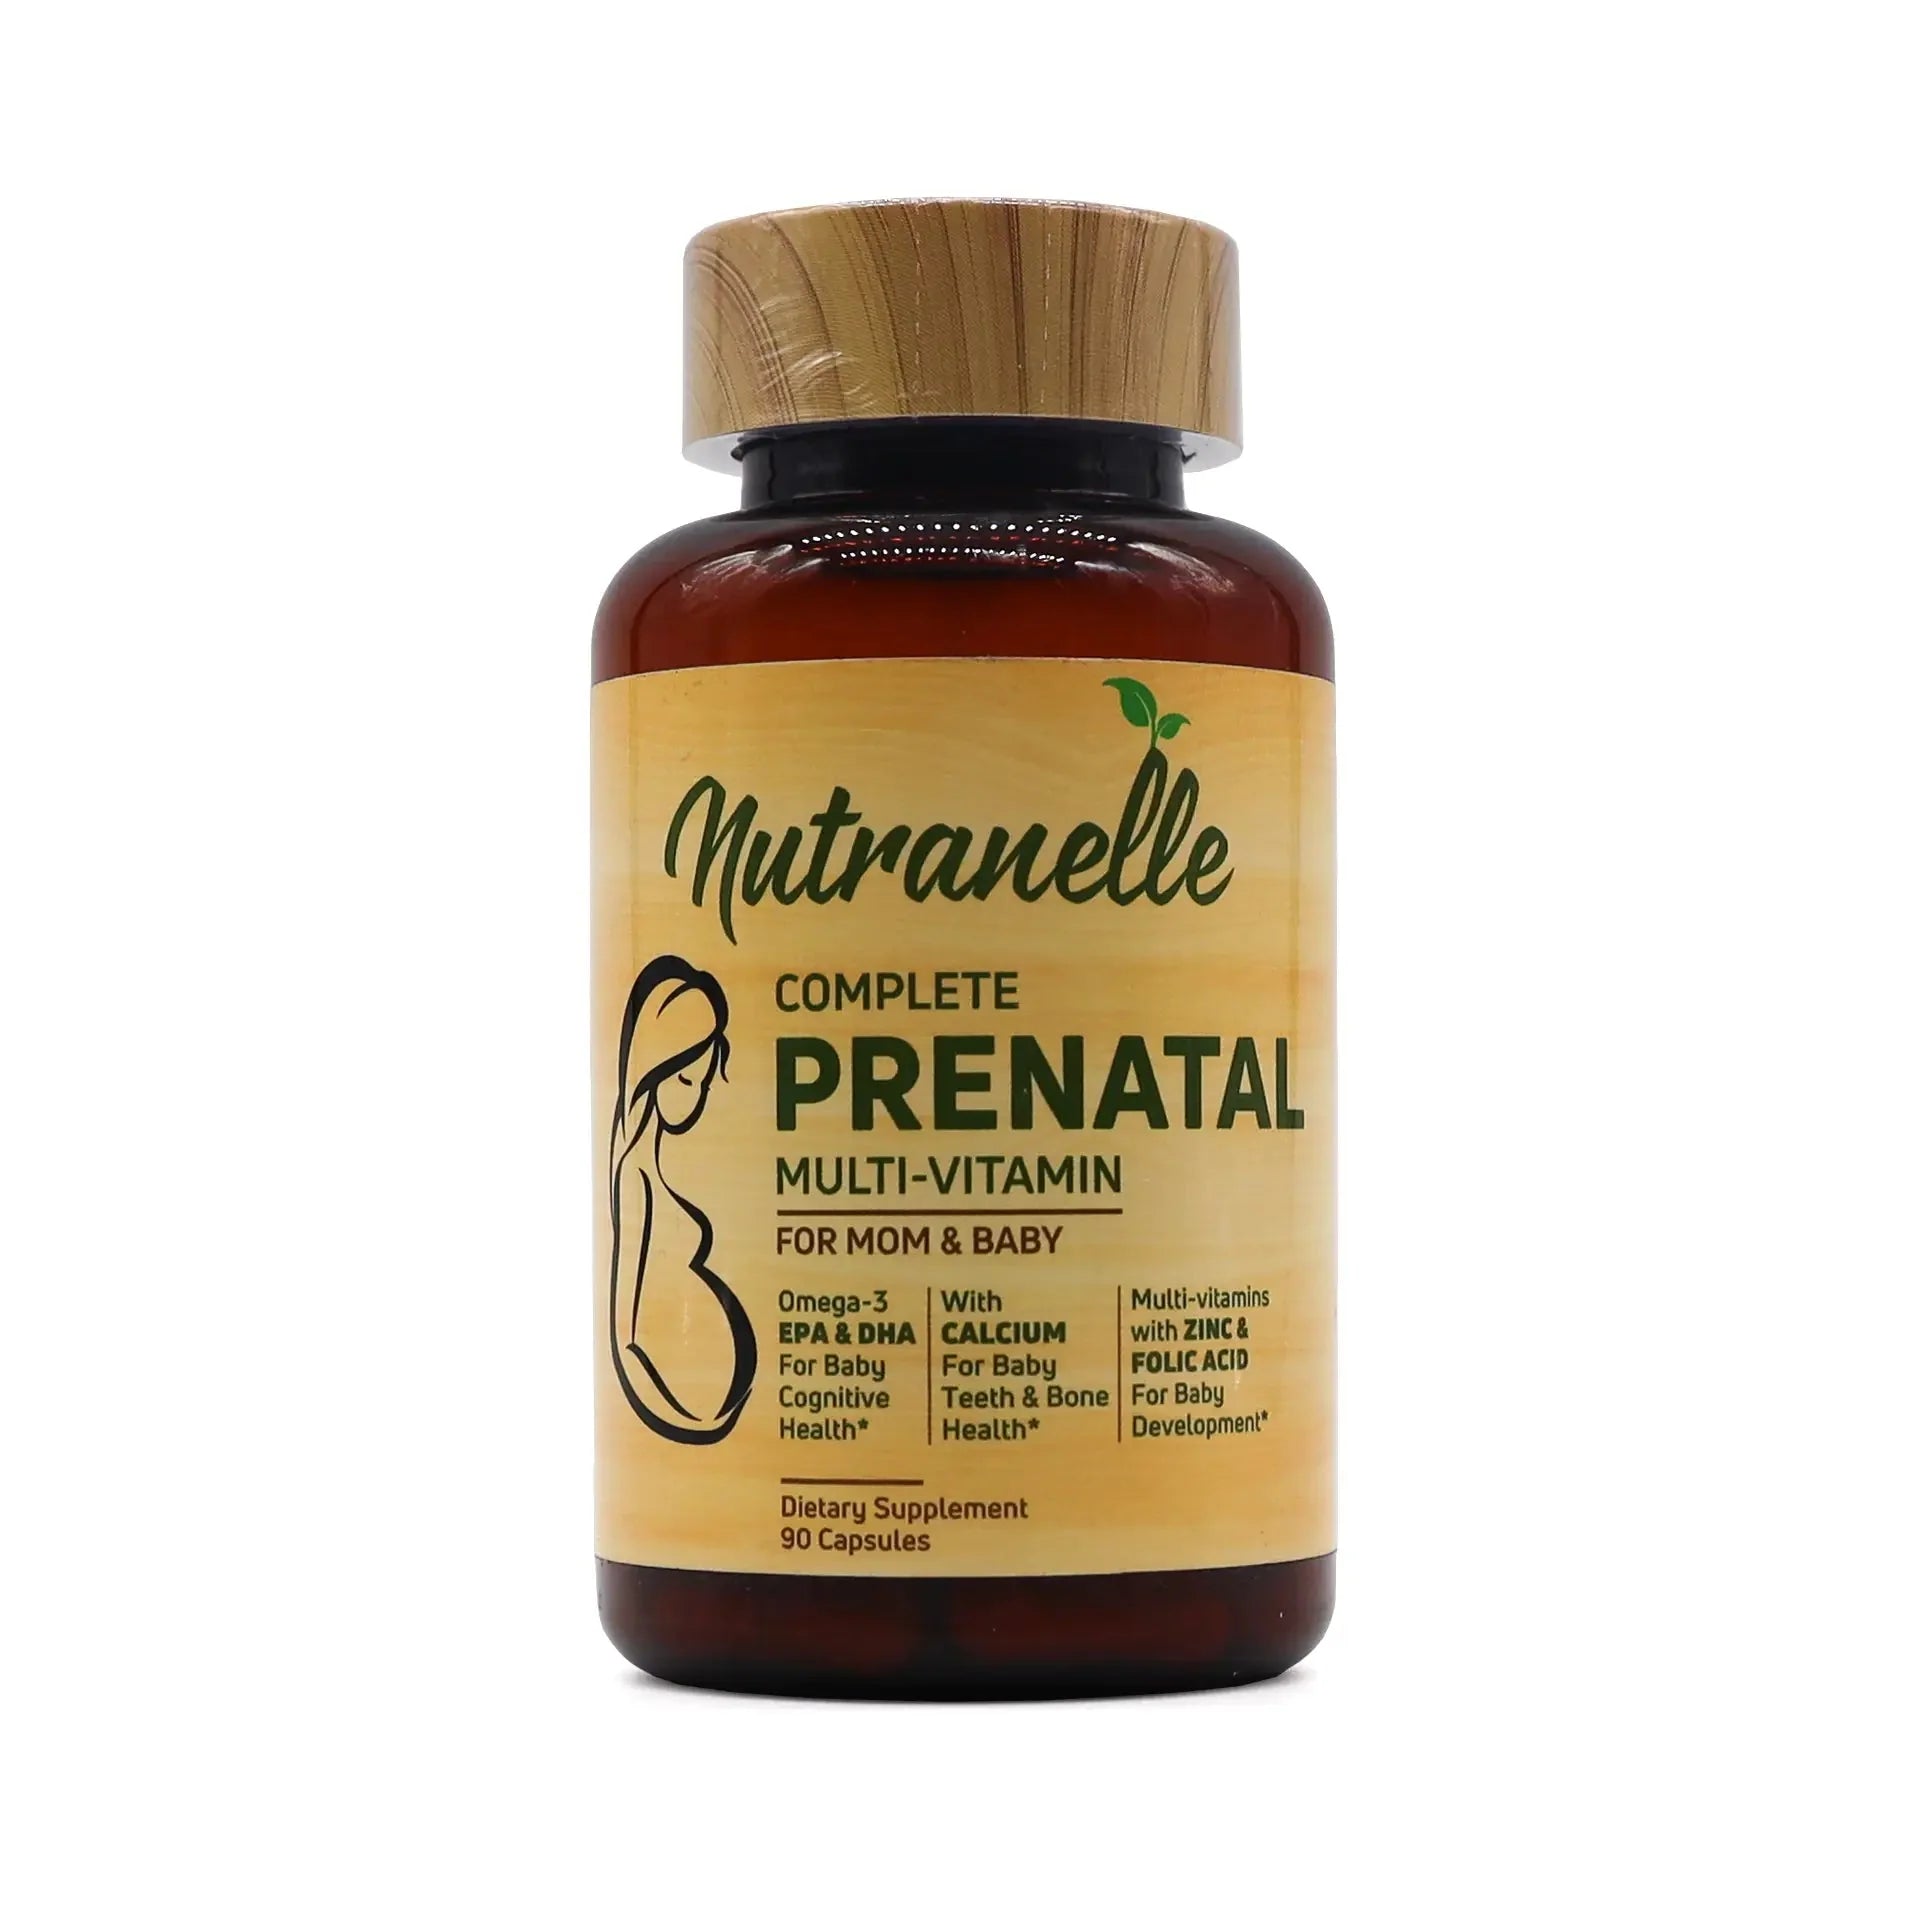 Natural Prenatal Vitamins - Nutranelle